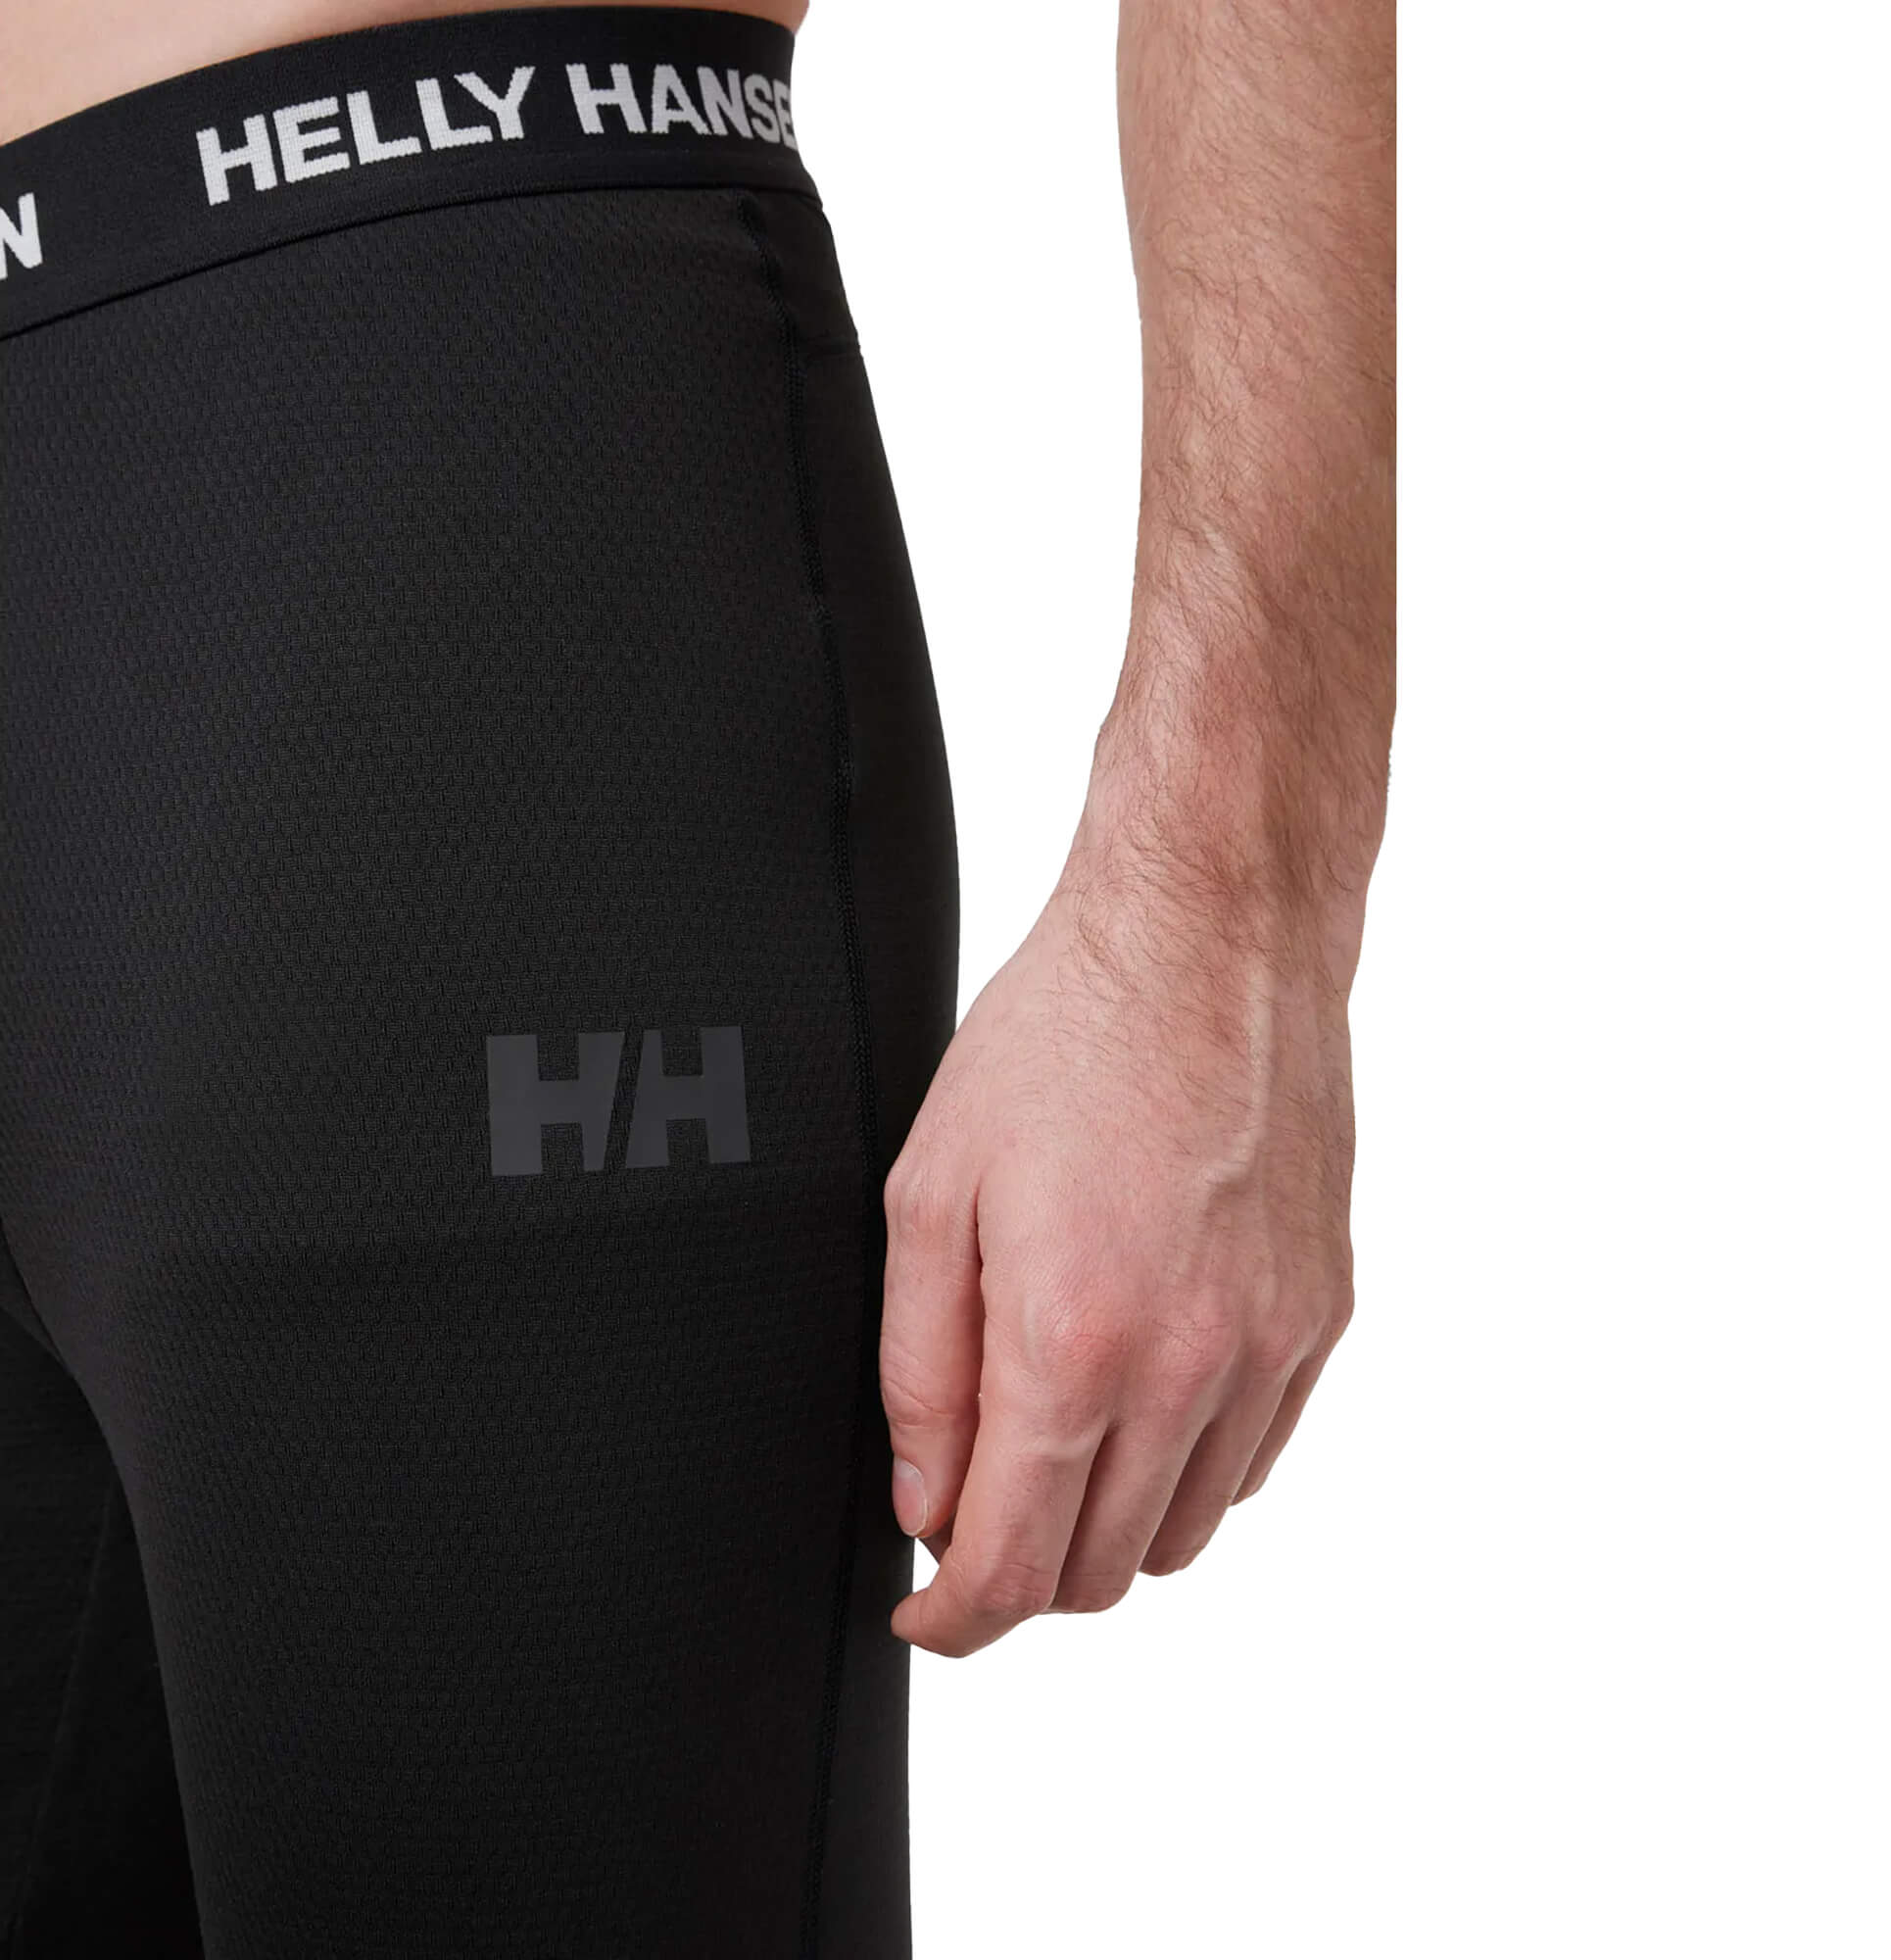 Helly Hansen LIFA Active Base Layer Pants